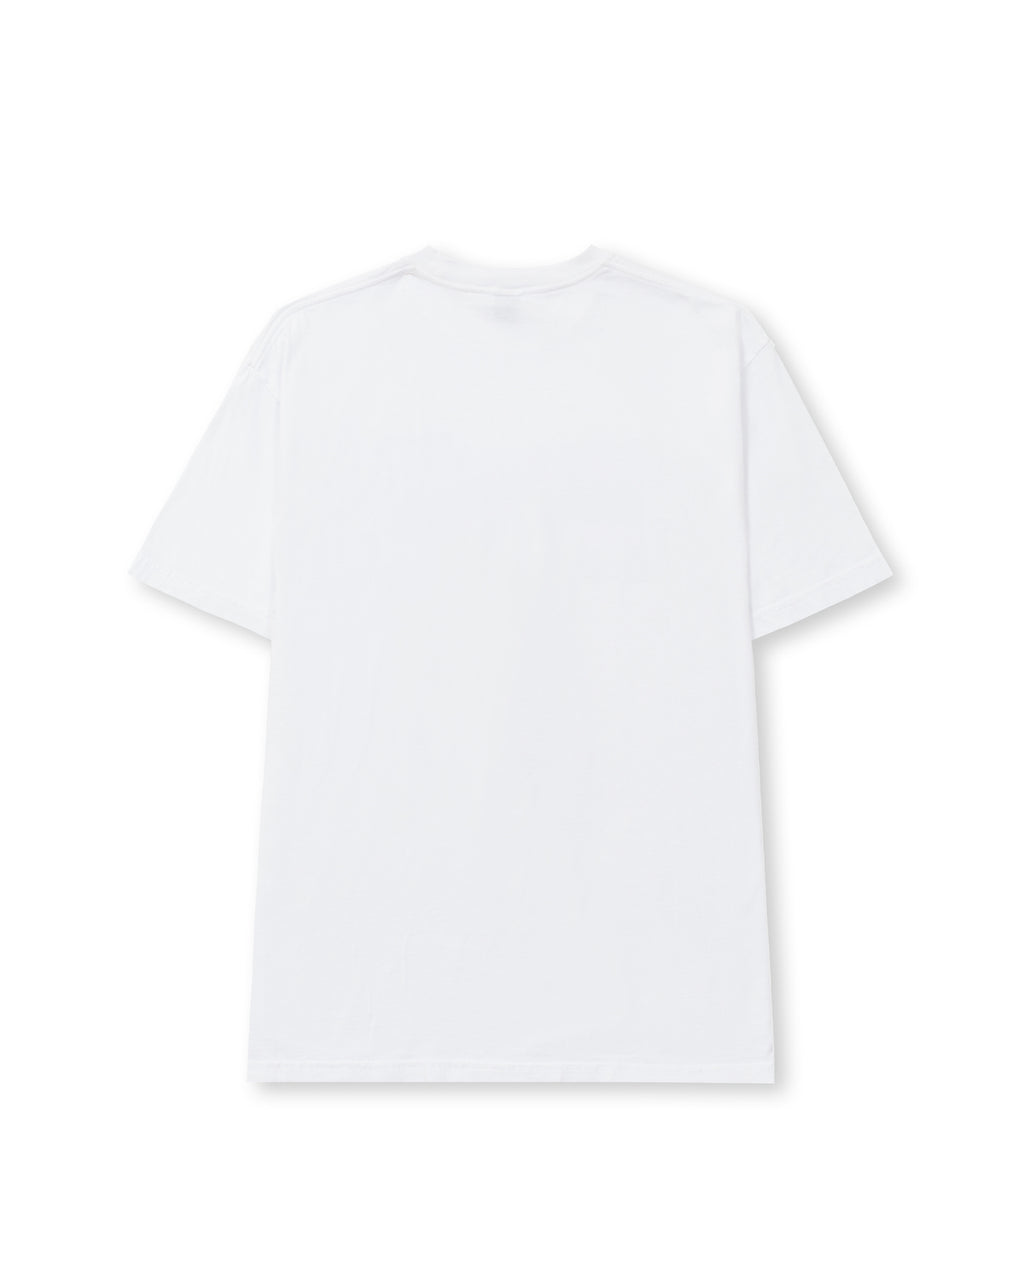 Fire Eyes T-Shirt - White 2